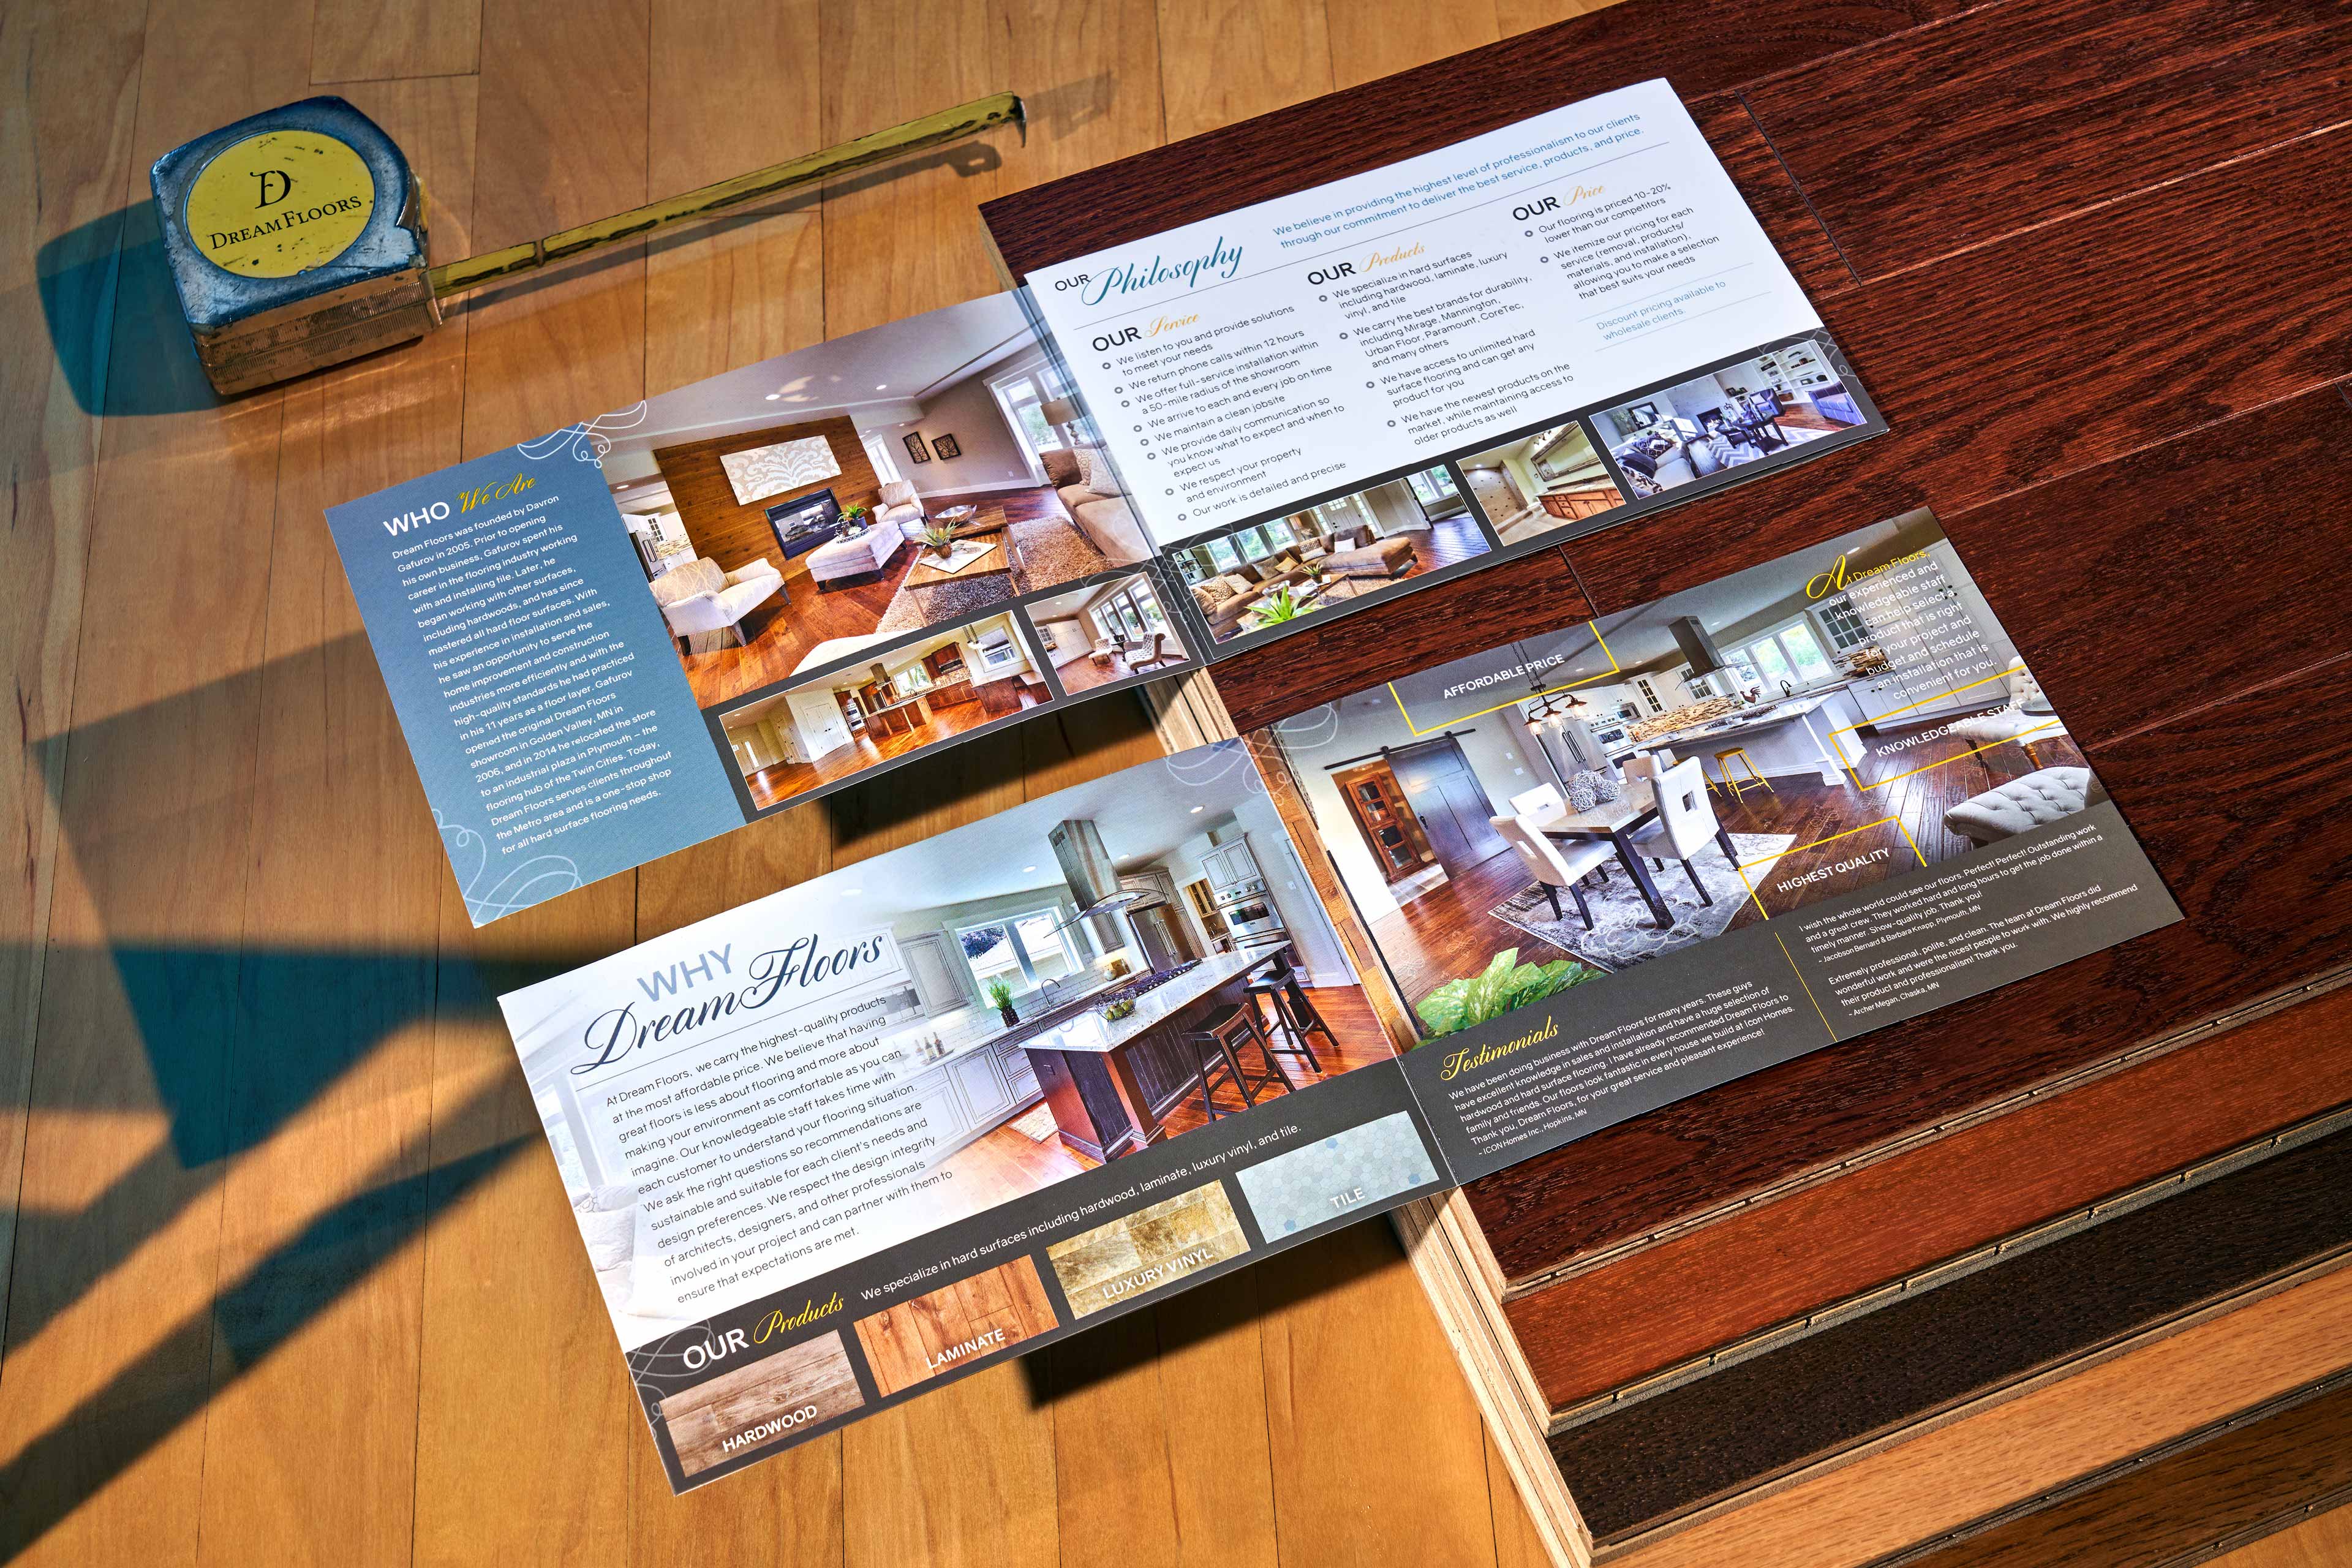 Inside spreads of the Dream Floors brochures.